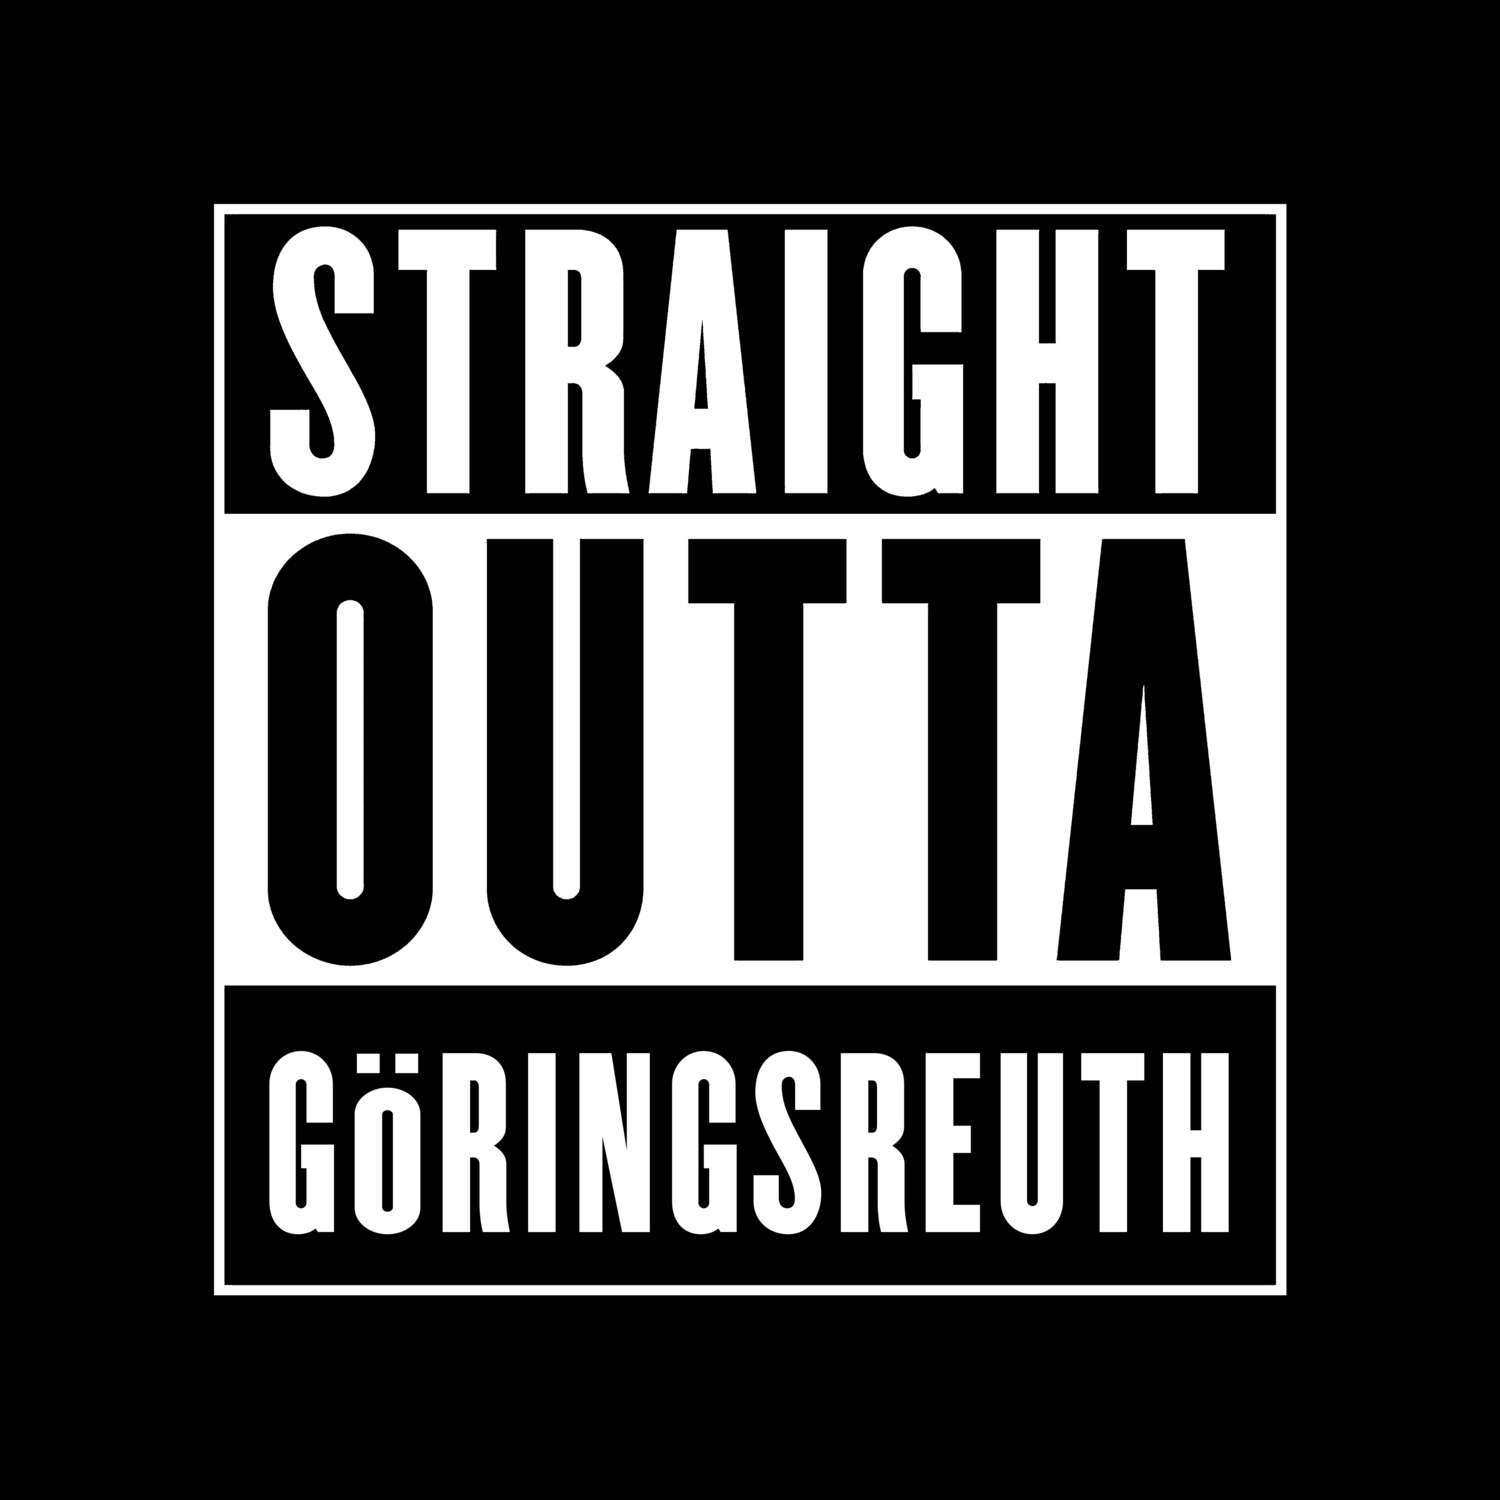 Göringsreuth T-Shirt »Straight Outta«